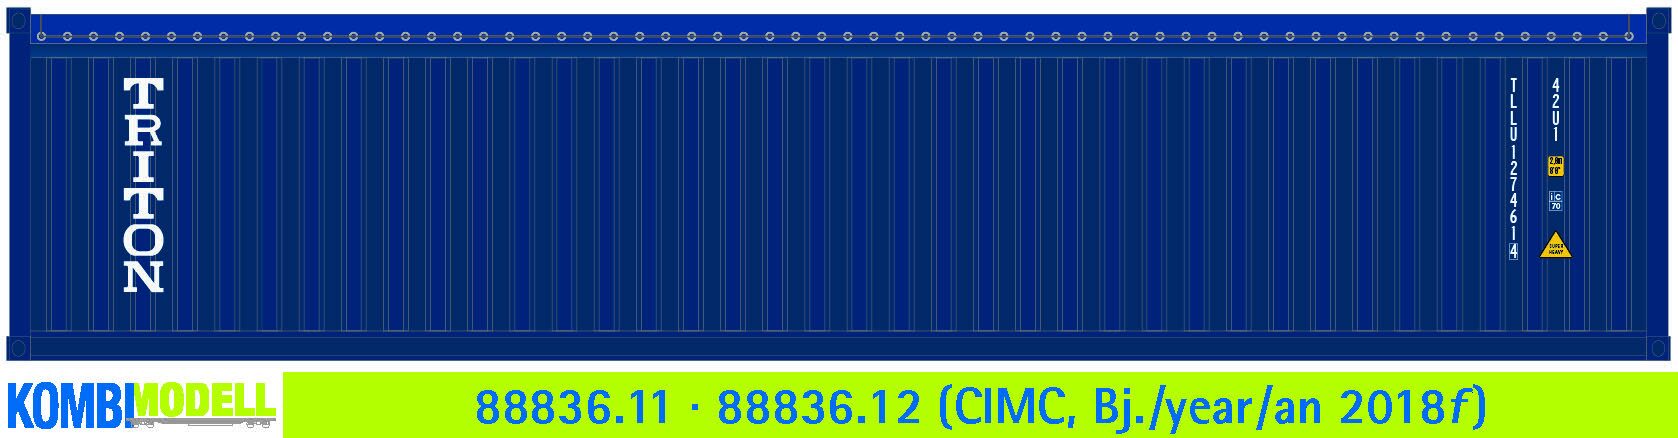 Kombimodell 88836.12 Ct 40`Open Top Triton blau SoSe 